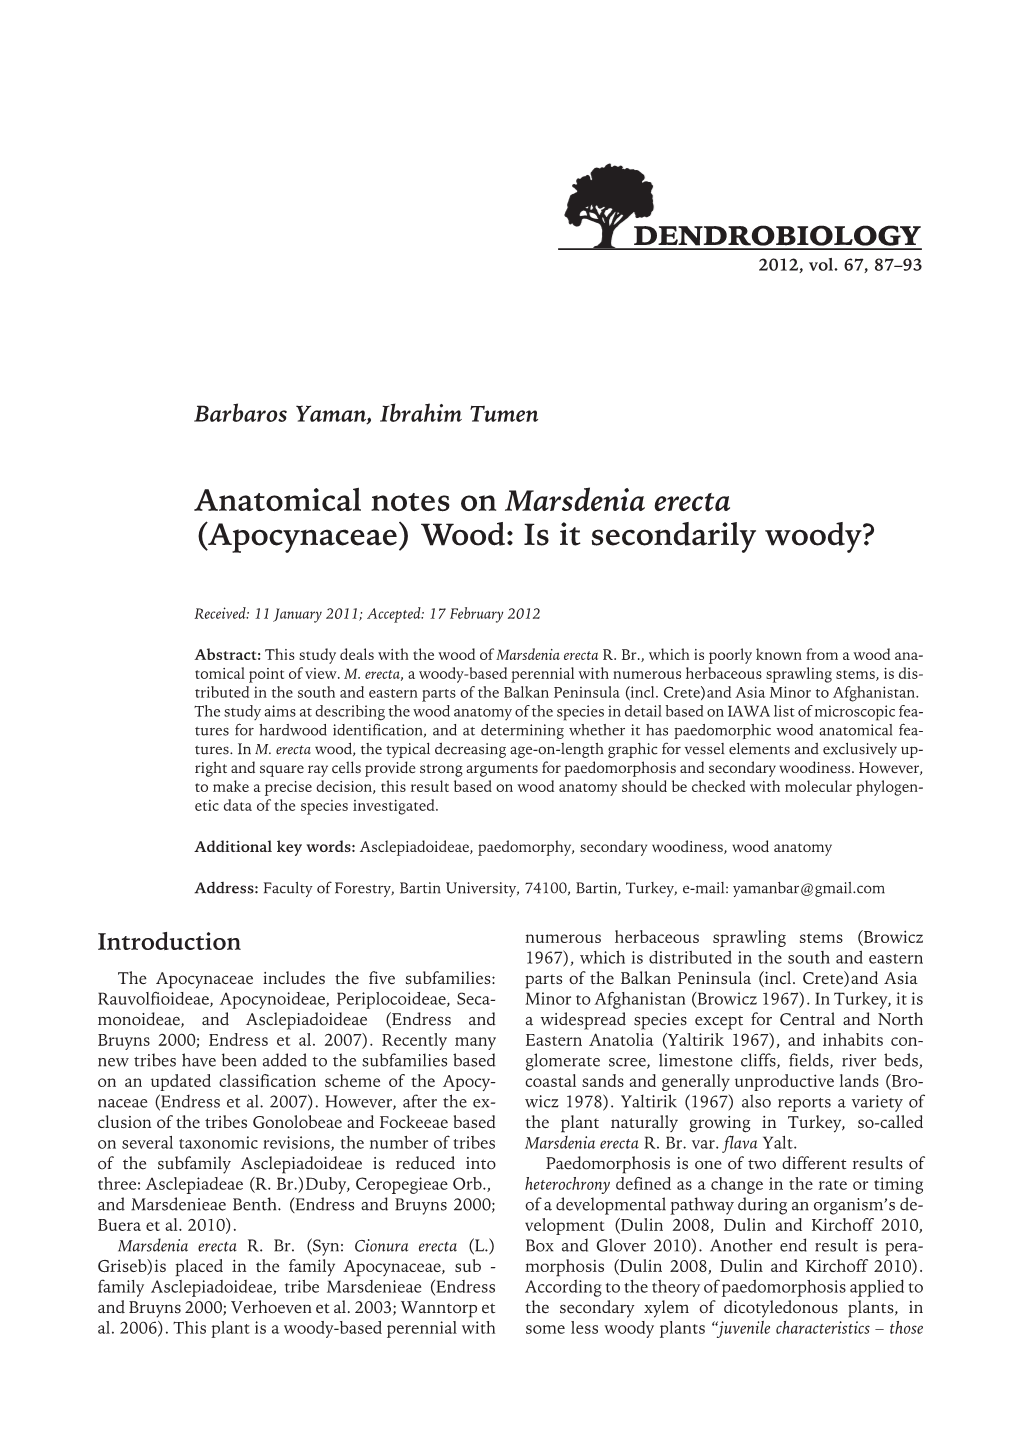 Anatomical Notes on Marsdenia Erecta (Apocynaceae) Wood: Is It Secondarily Woody?